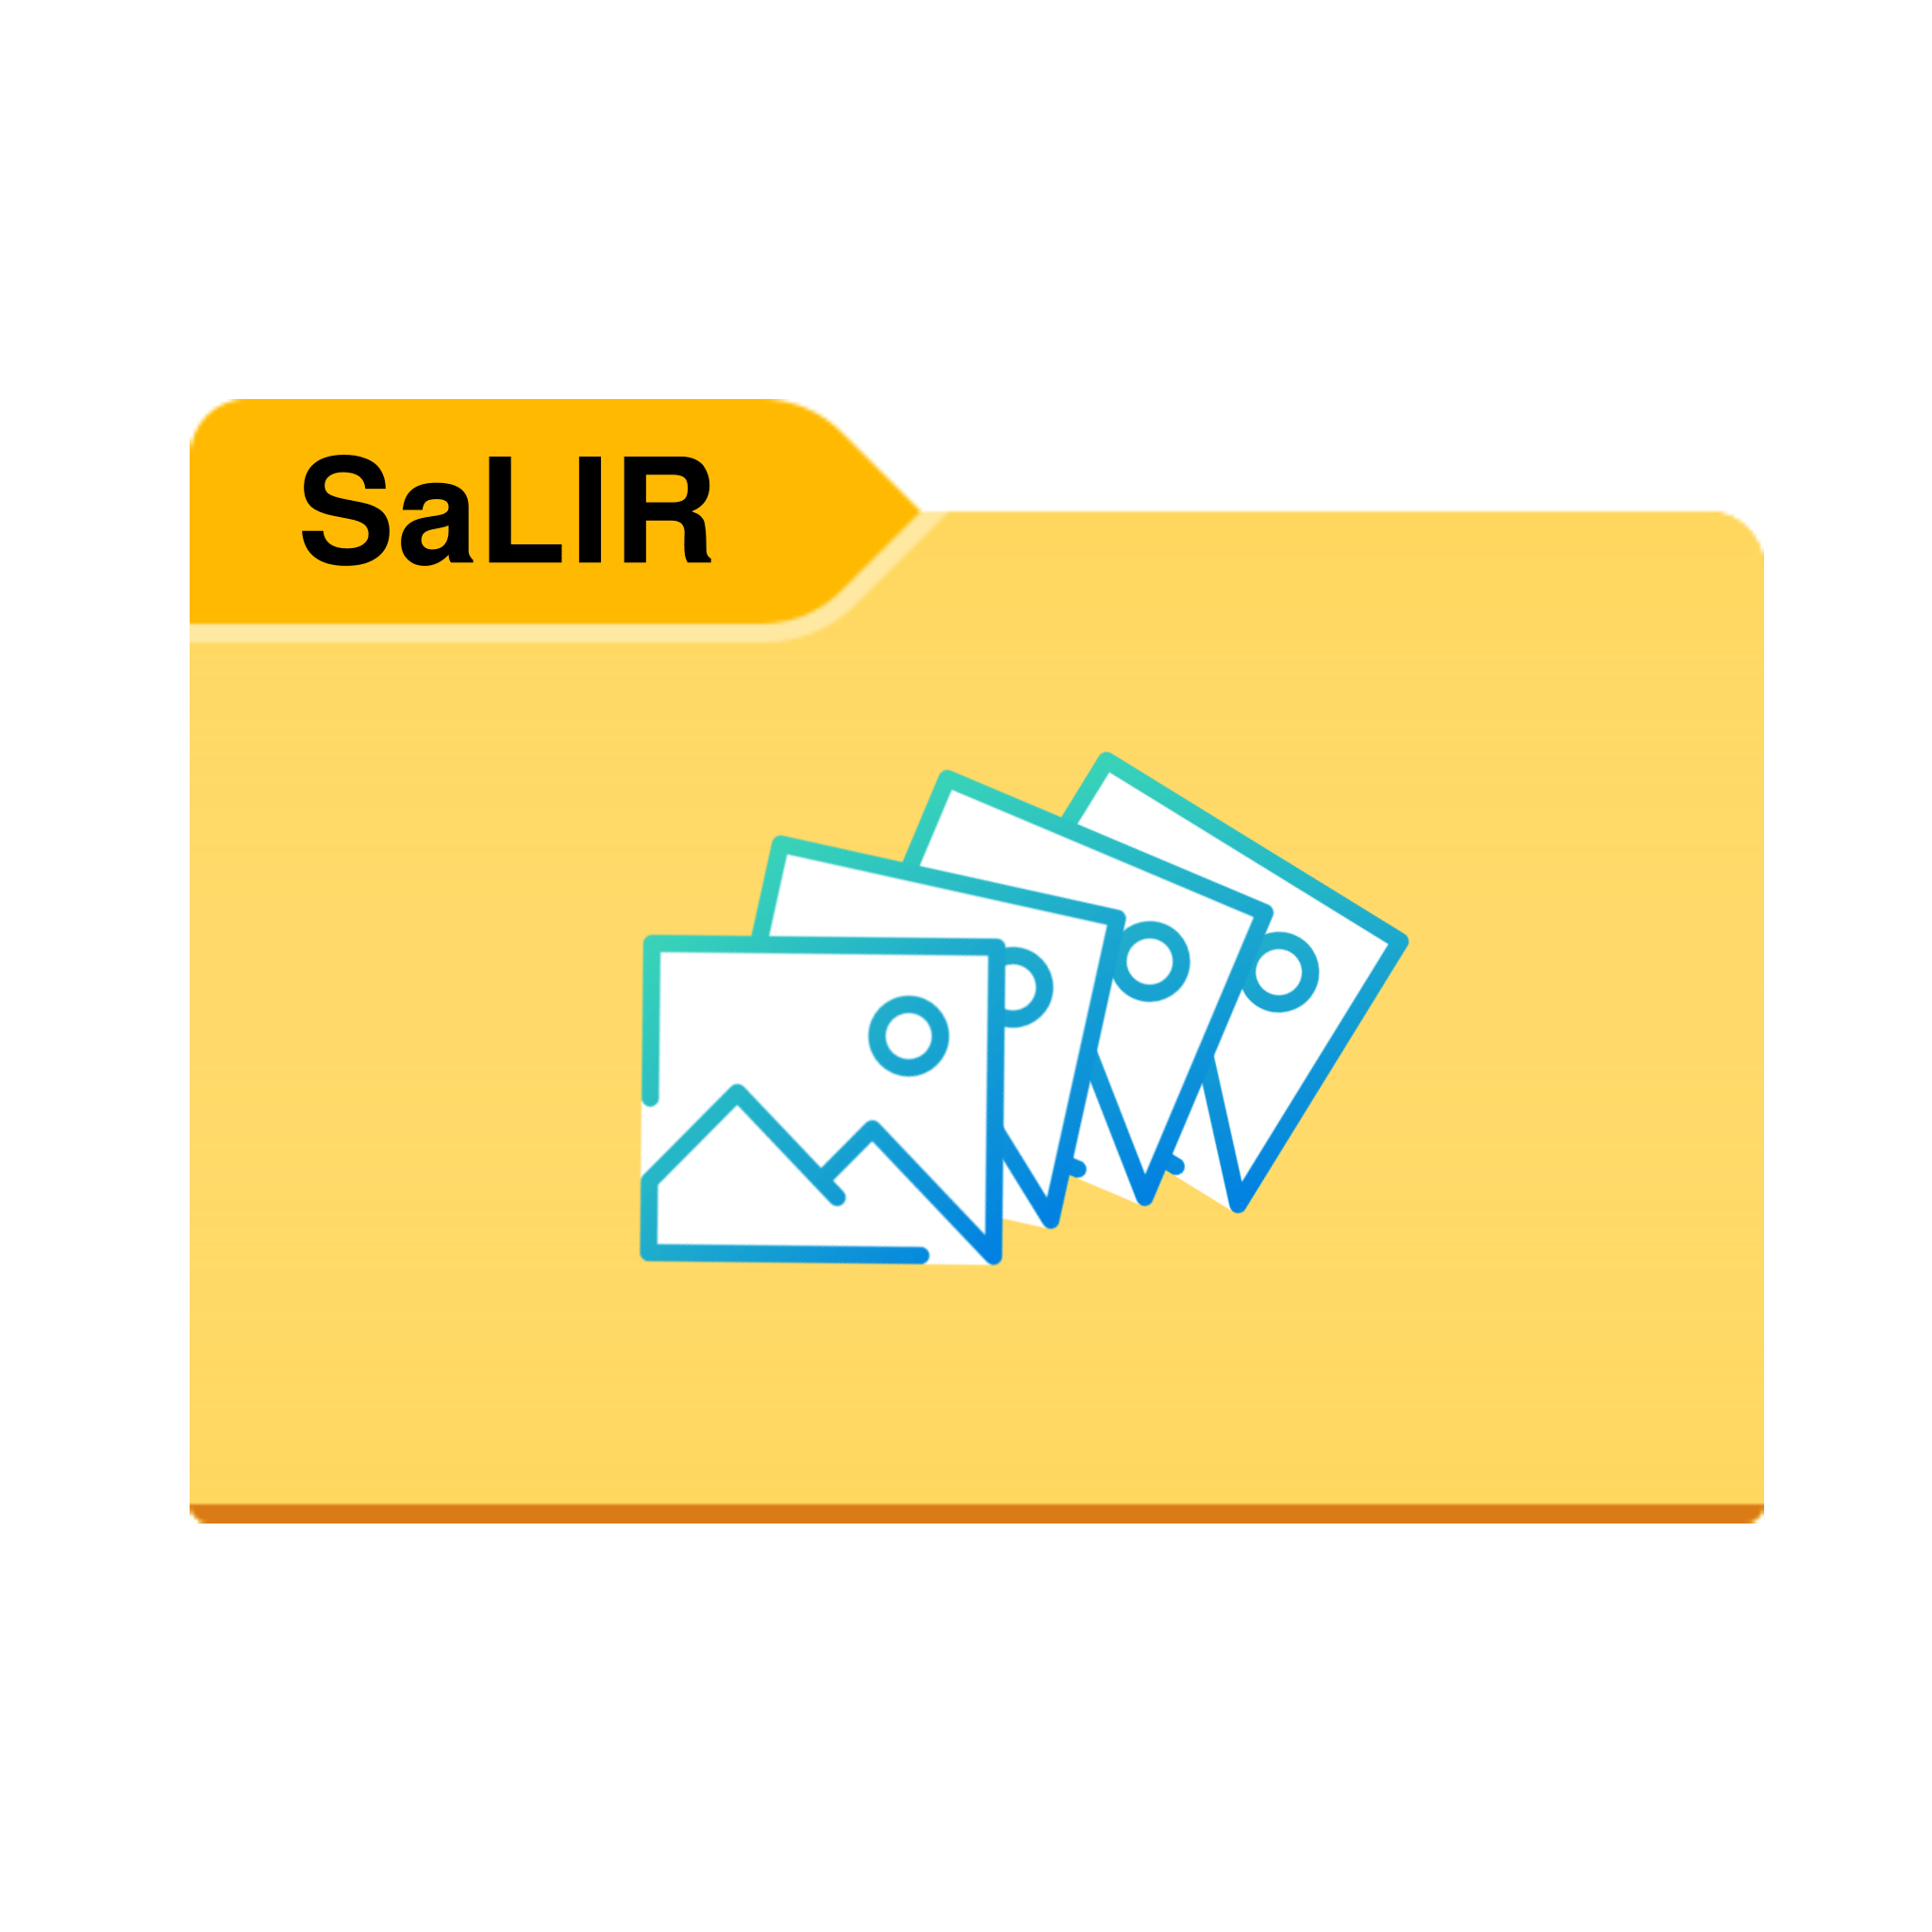 SaLIR (Server List Image Randomizer)